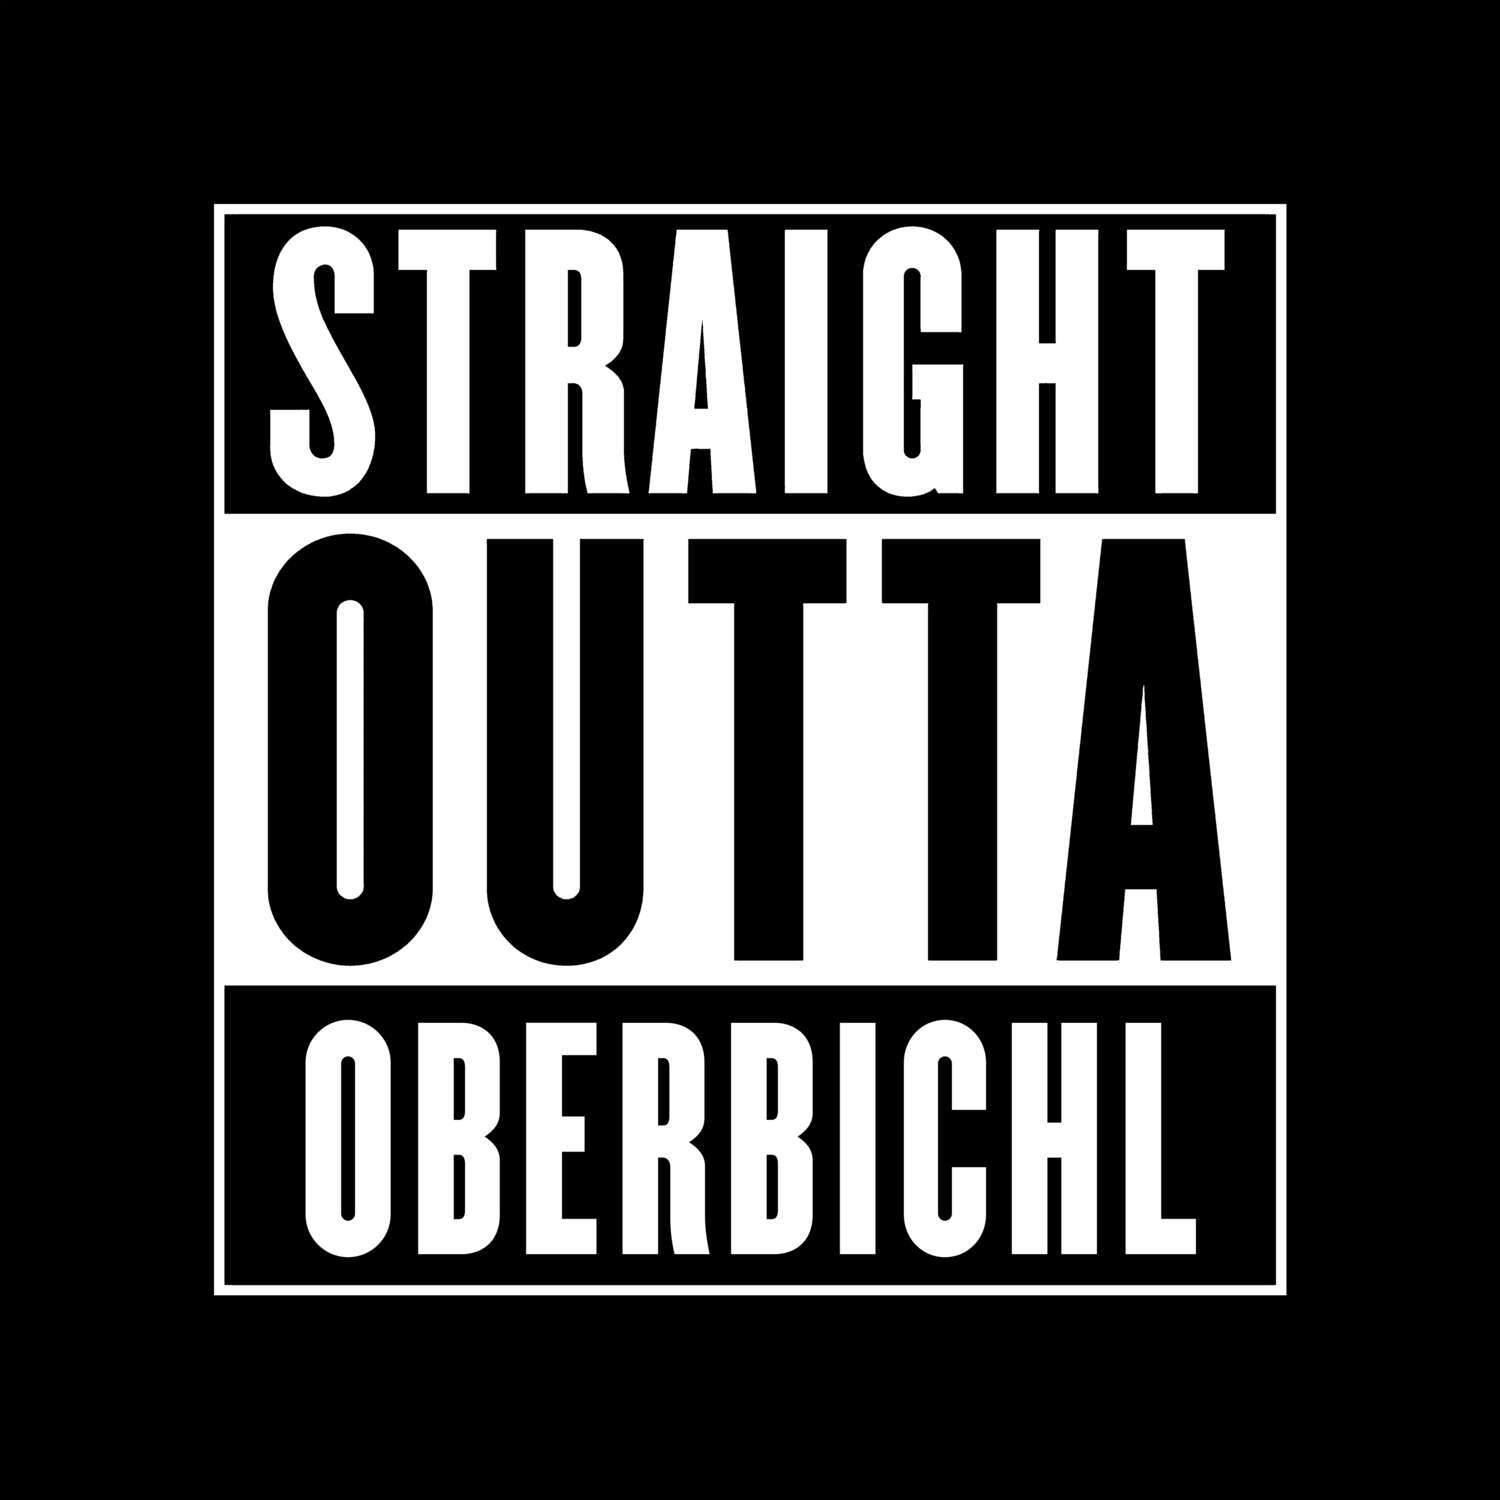 Oberbichl T-Shirt »Straight Outta«